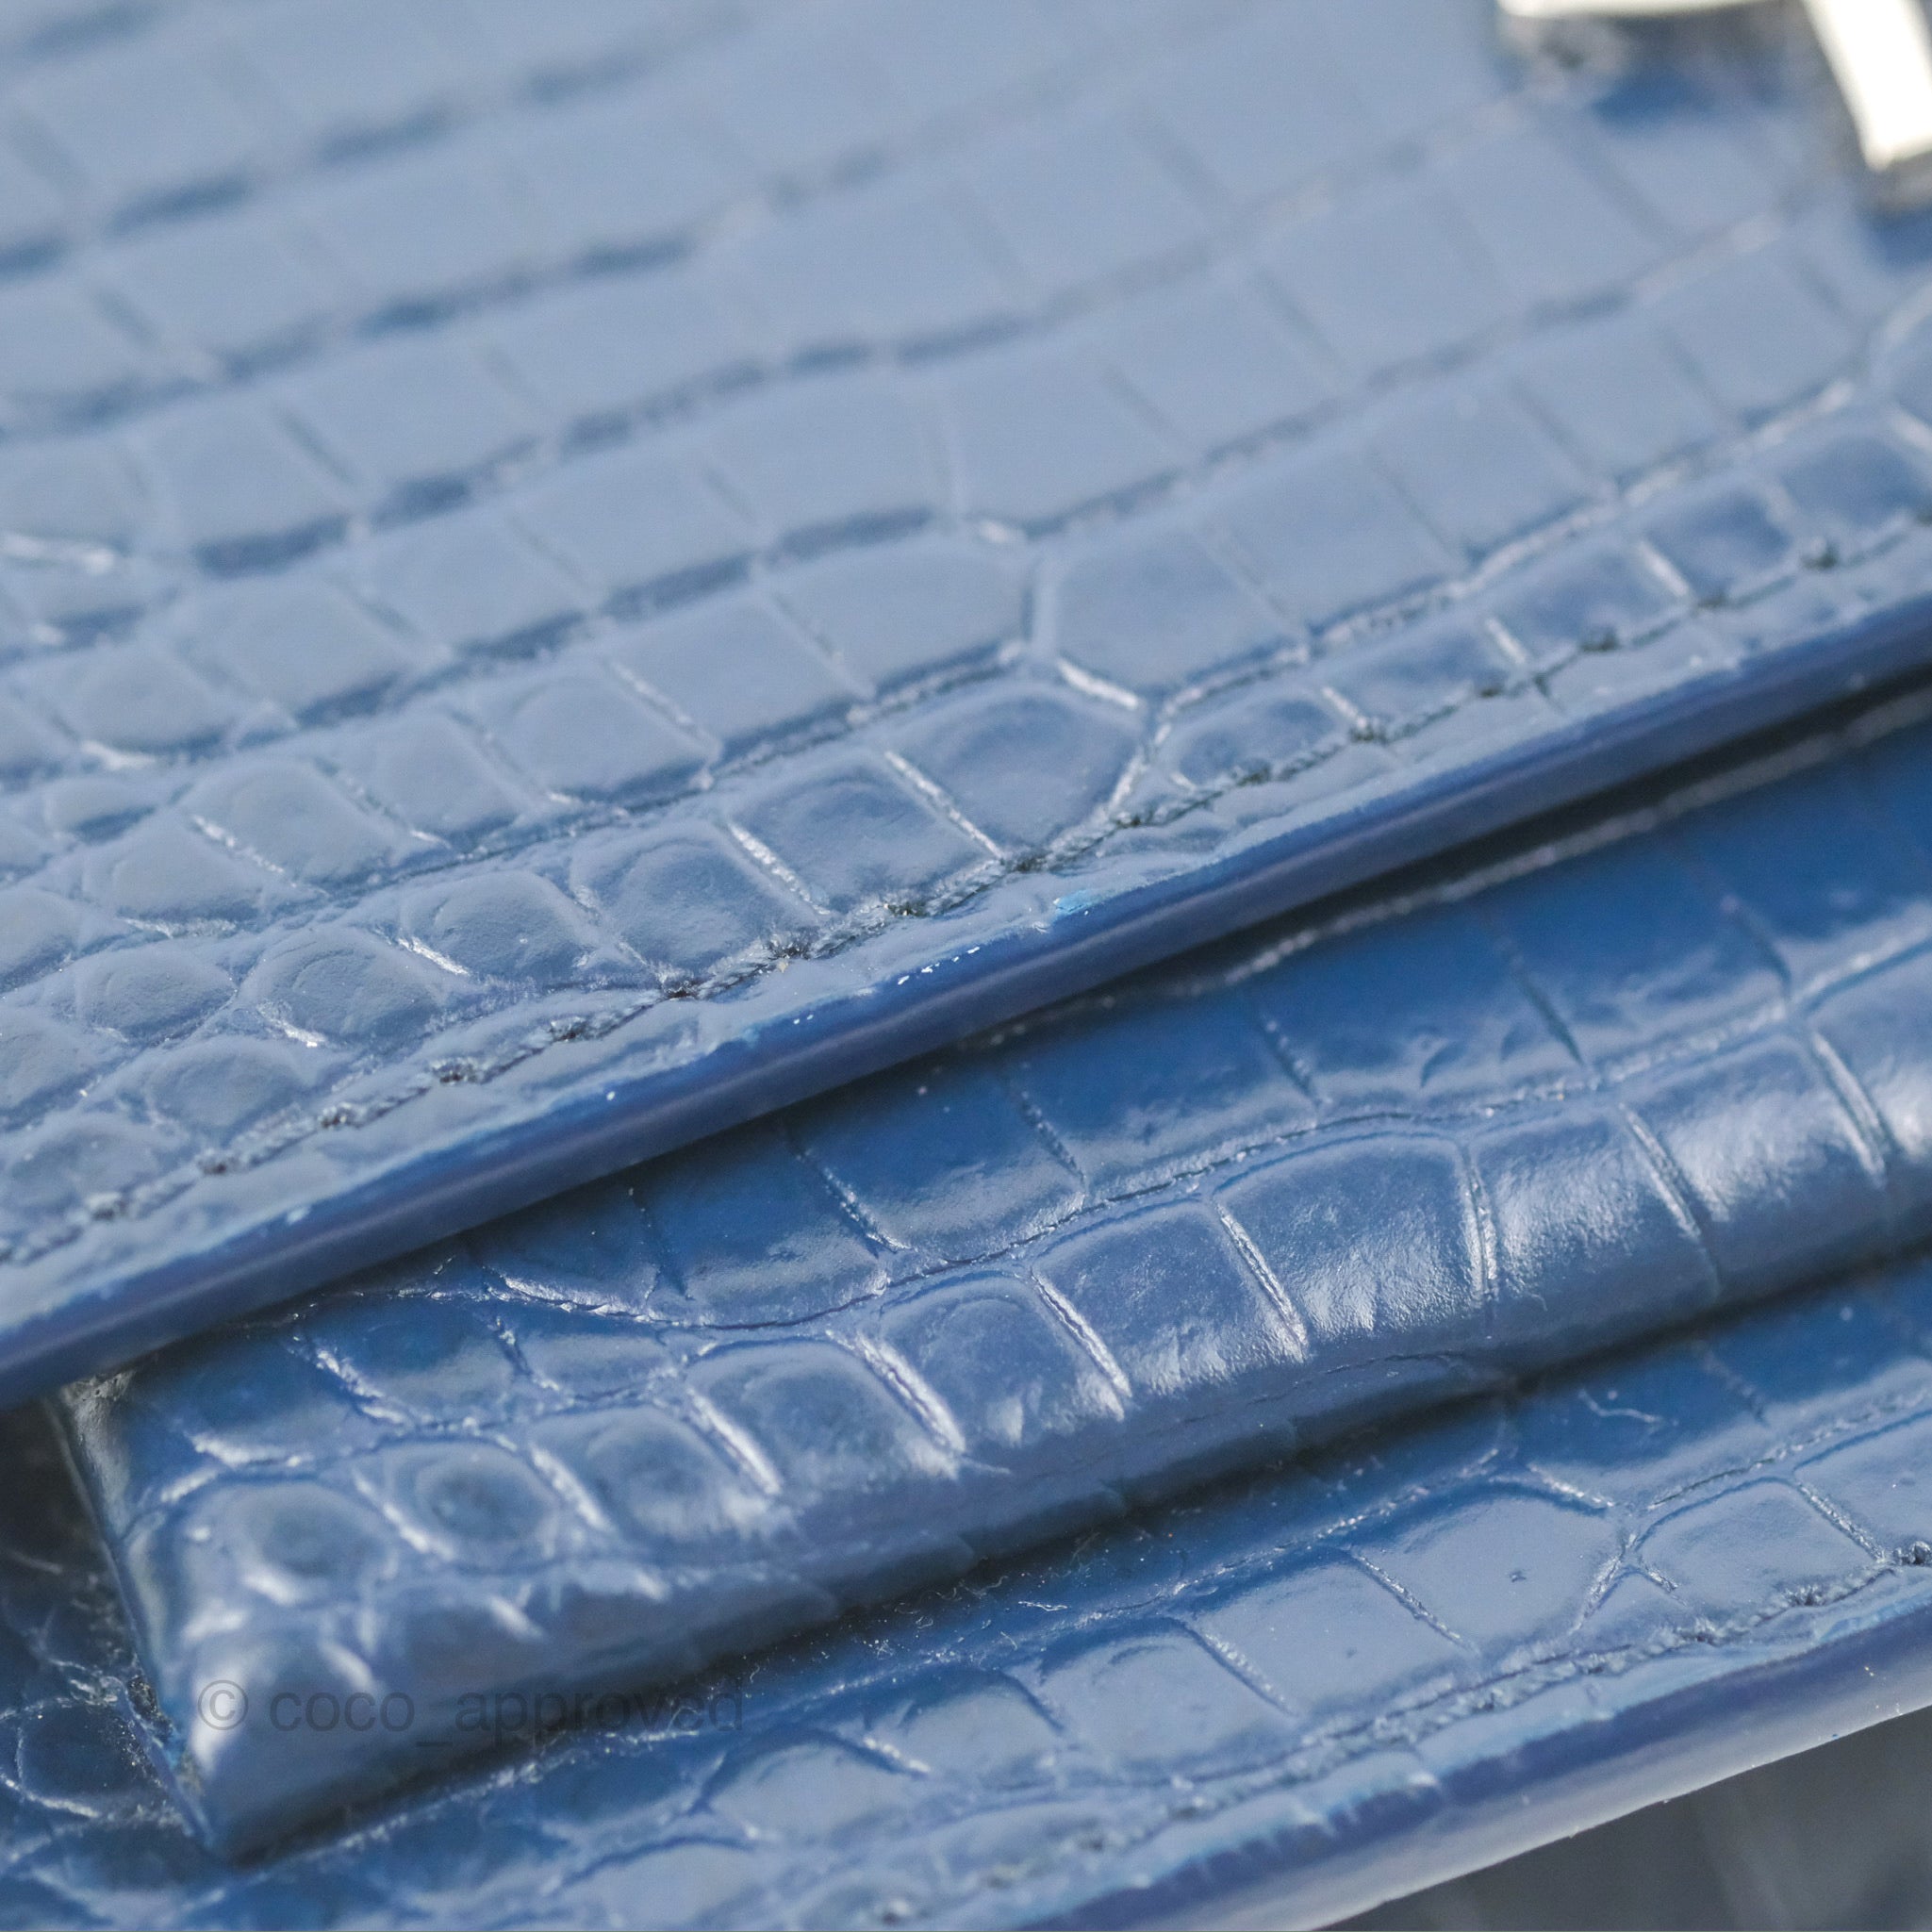 Saint Laurent Sunset Chain Wallet In Crocodile Embossed Leather, Designer  code: 533026DND1J, Luxury Fashion Eshop